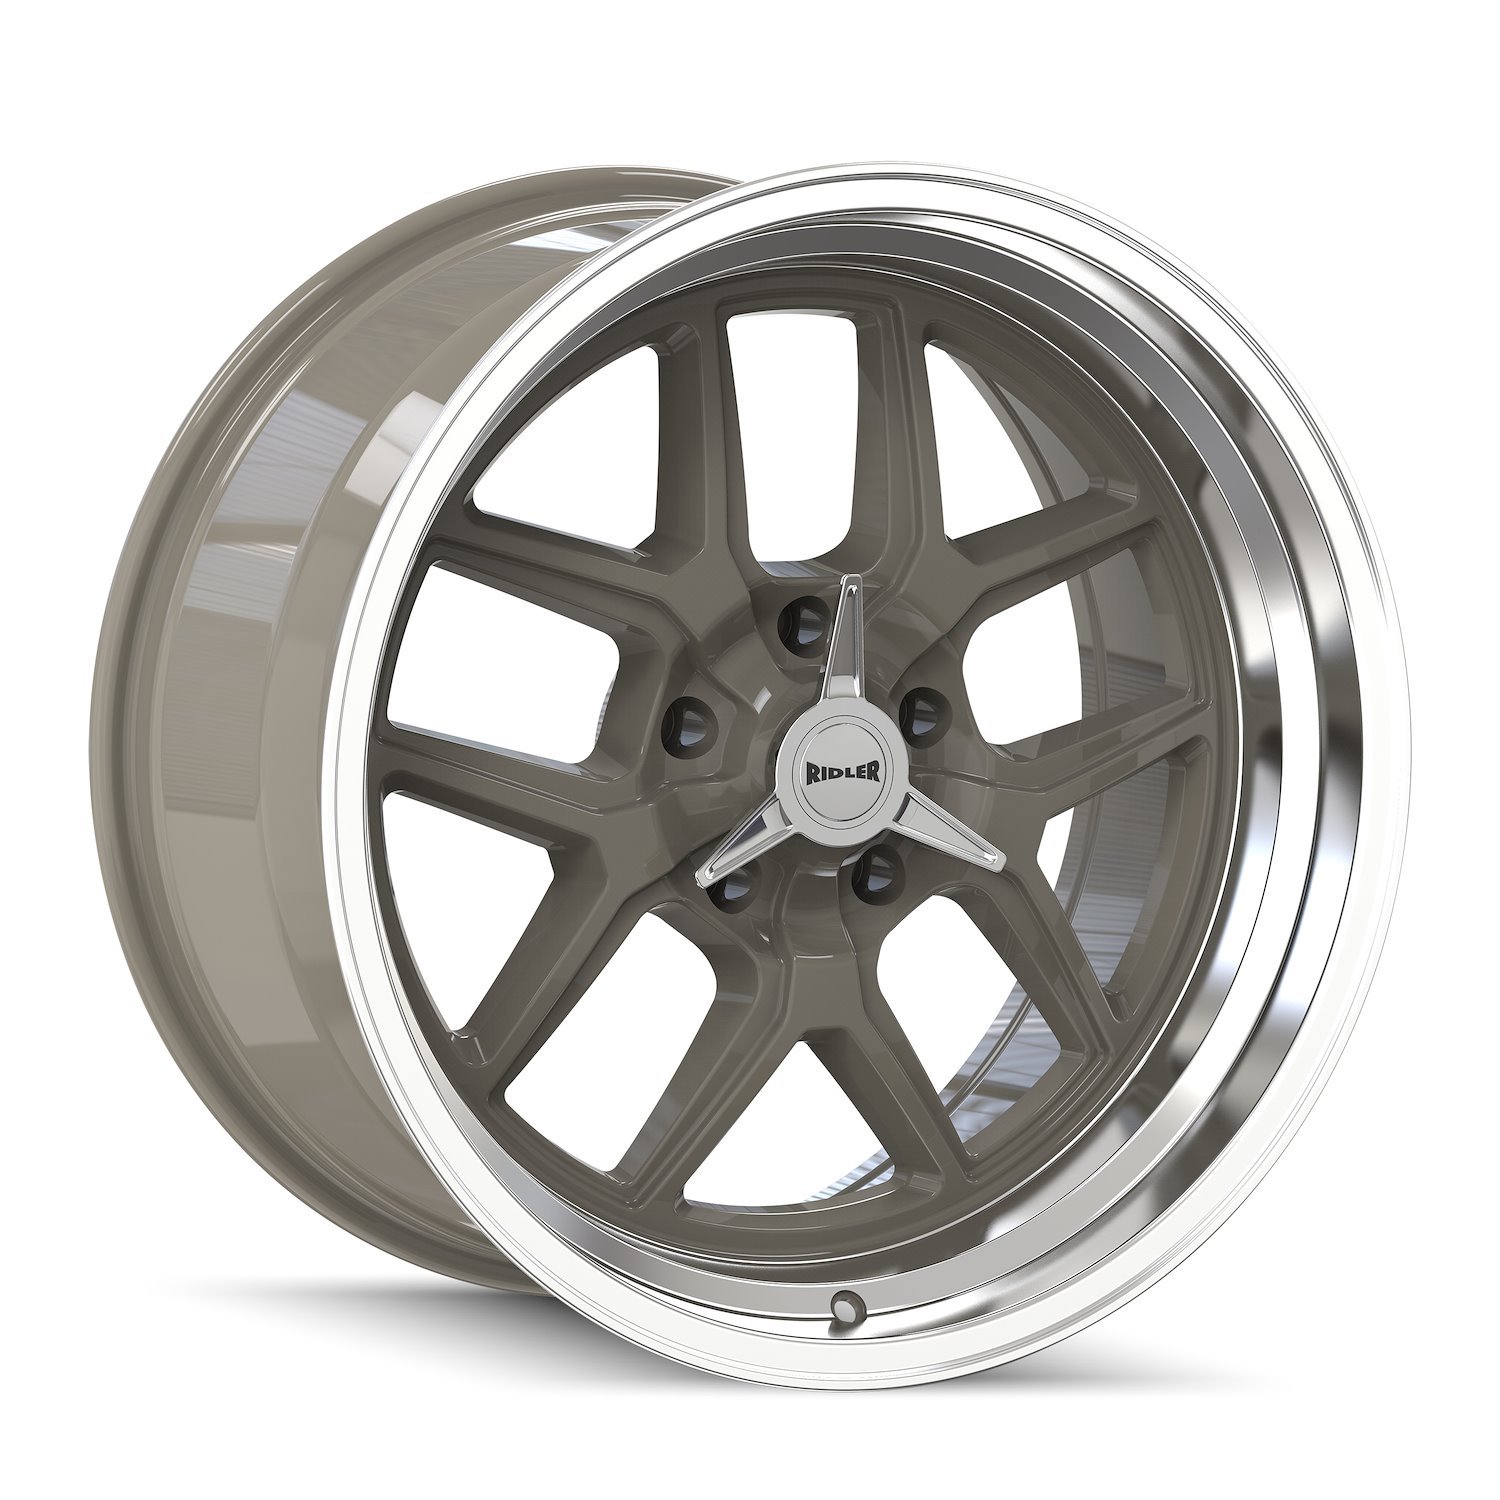 610-7765G 610-Series Wheel [Size: 17" x 7"] Gloss Grey Polished Finish